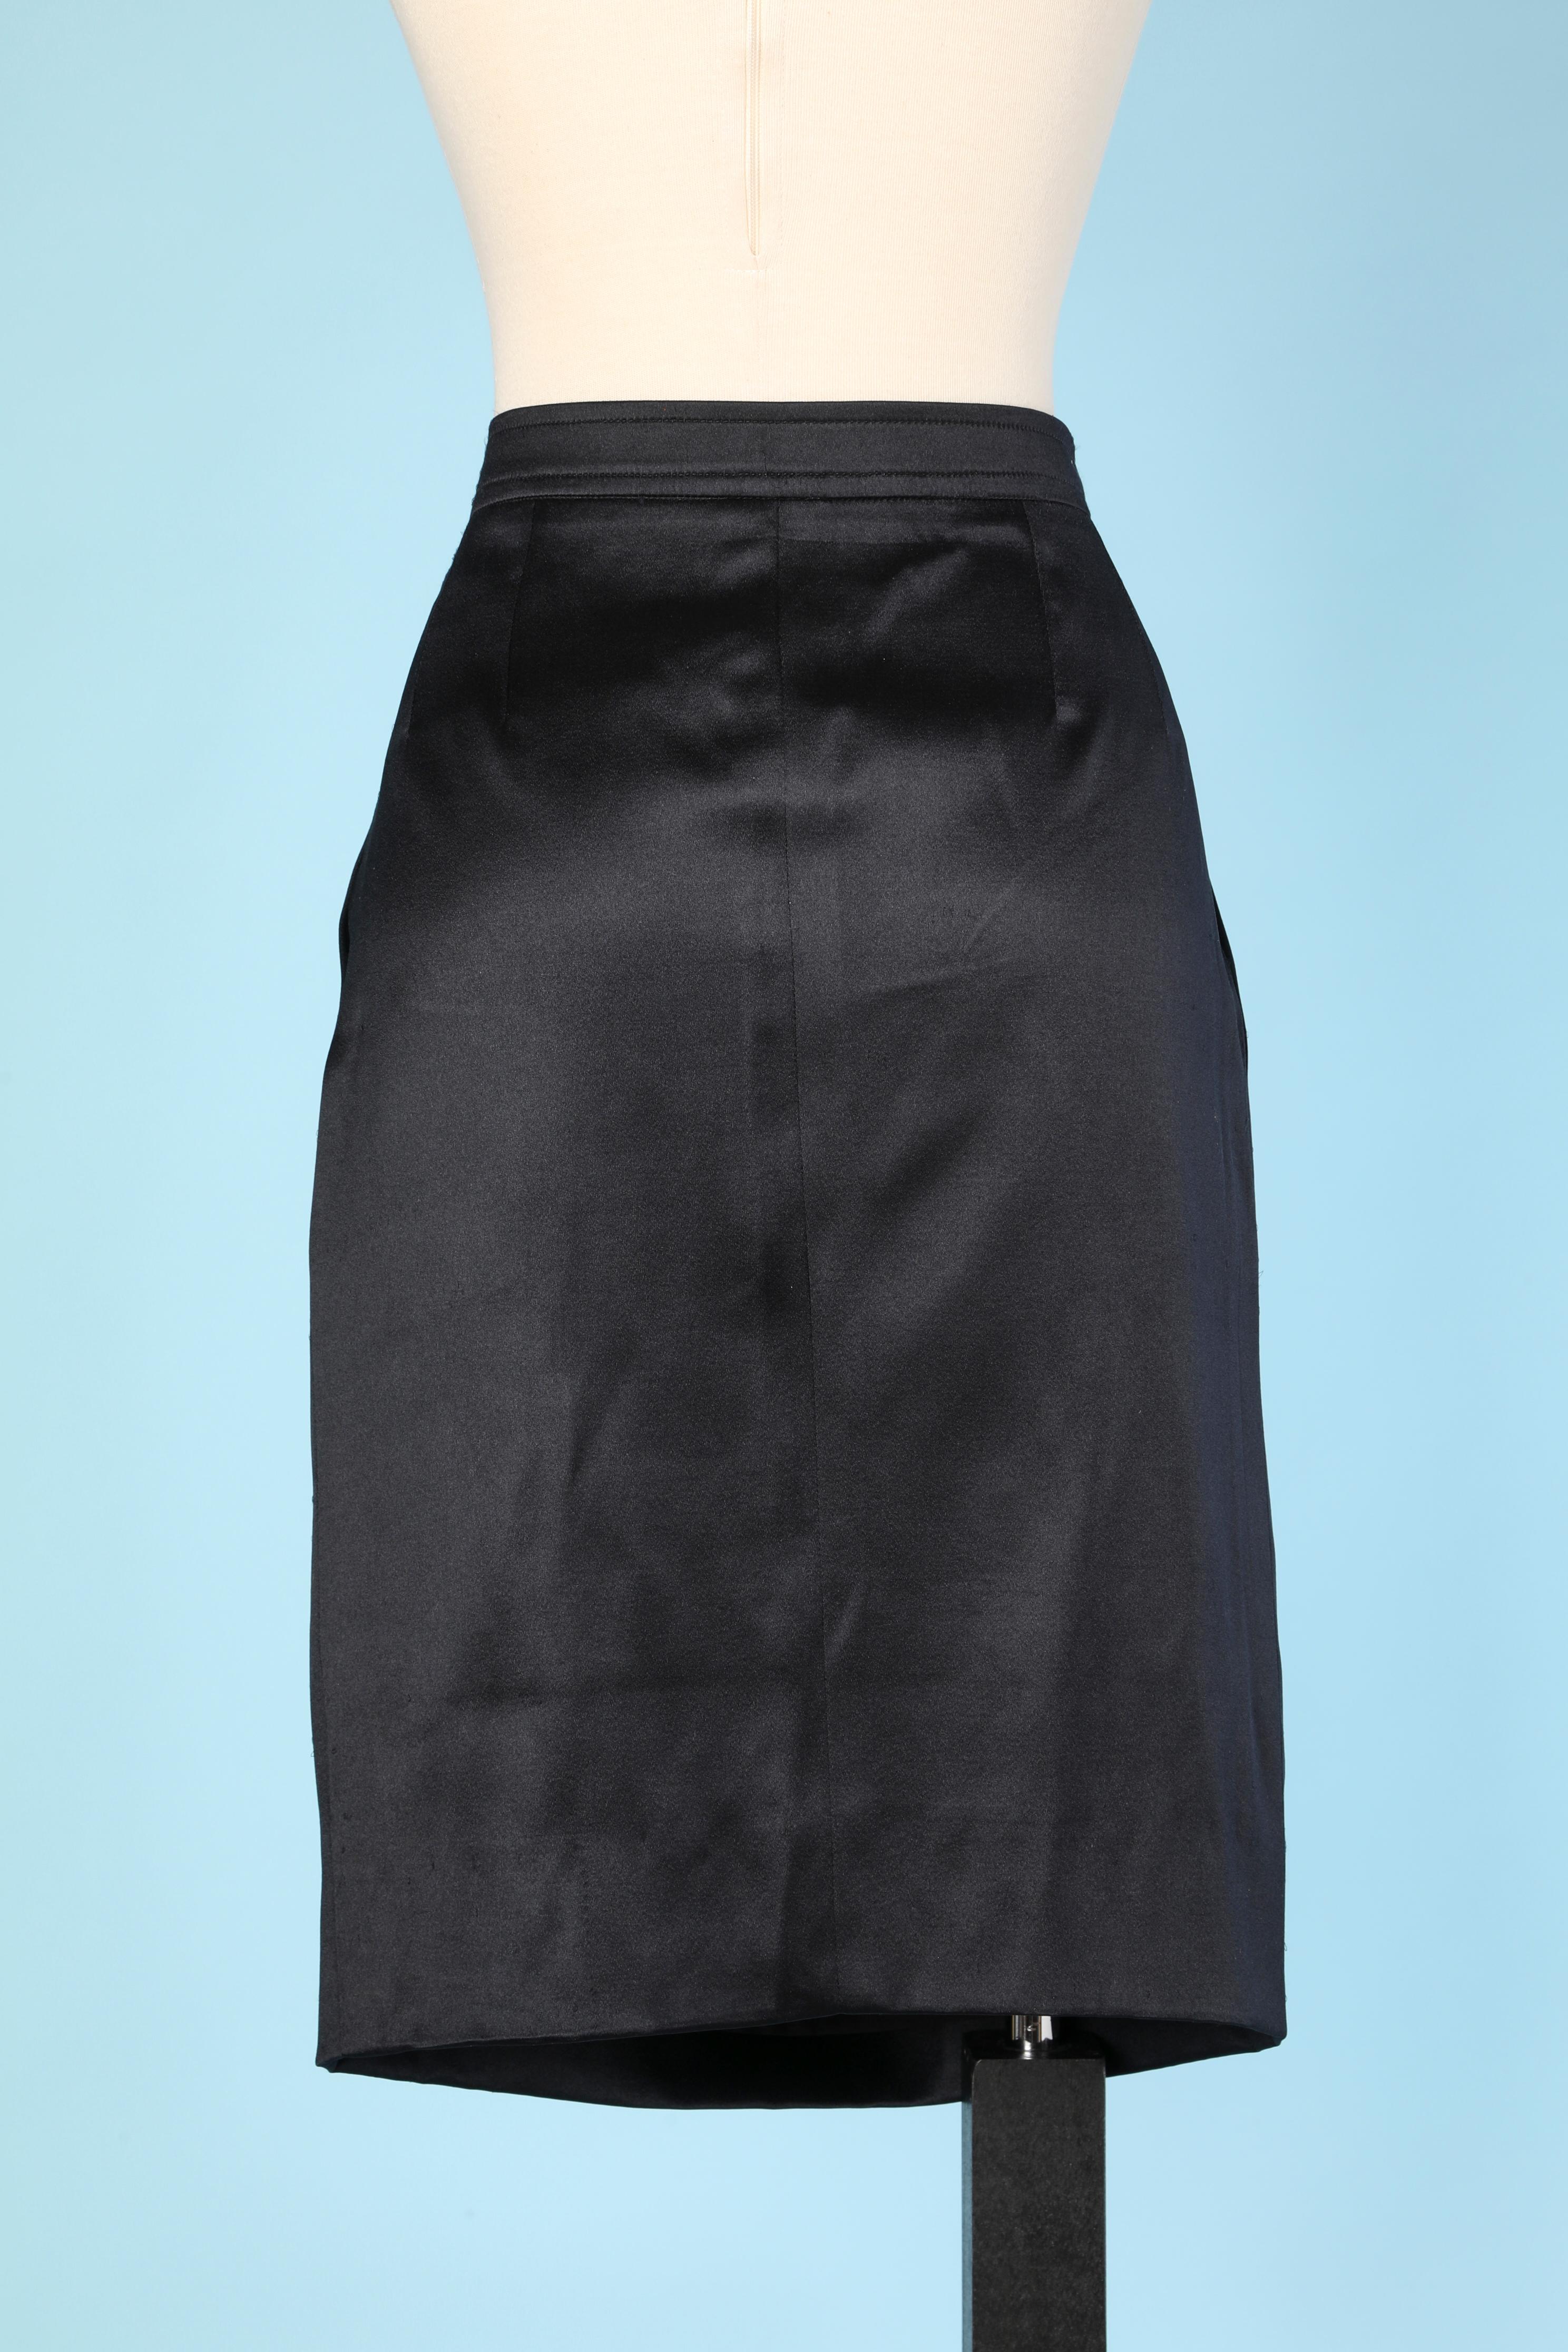 satin black pencil skirt